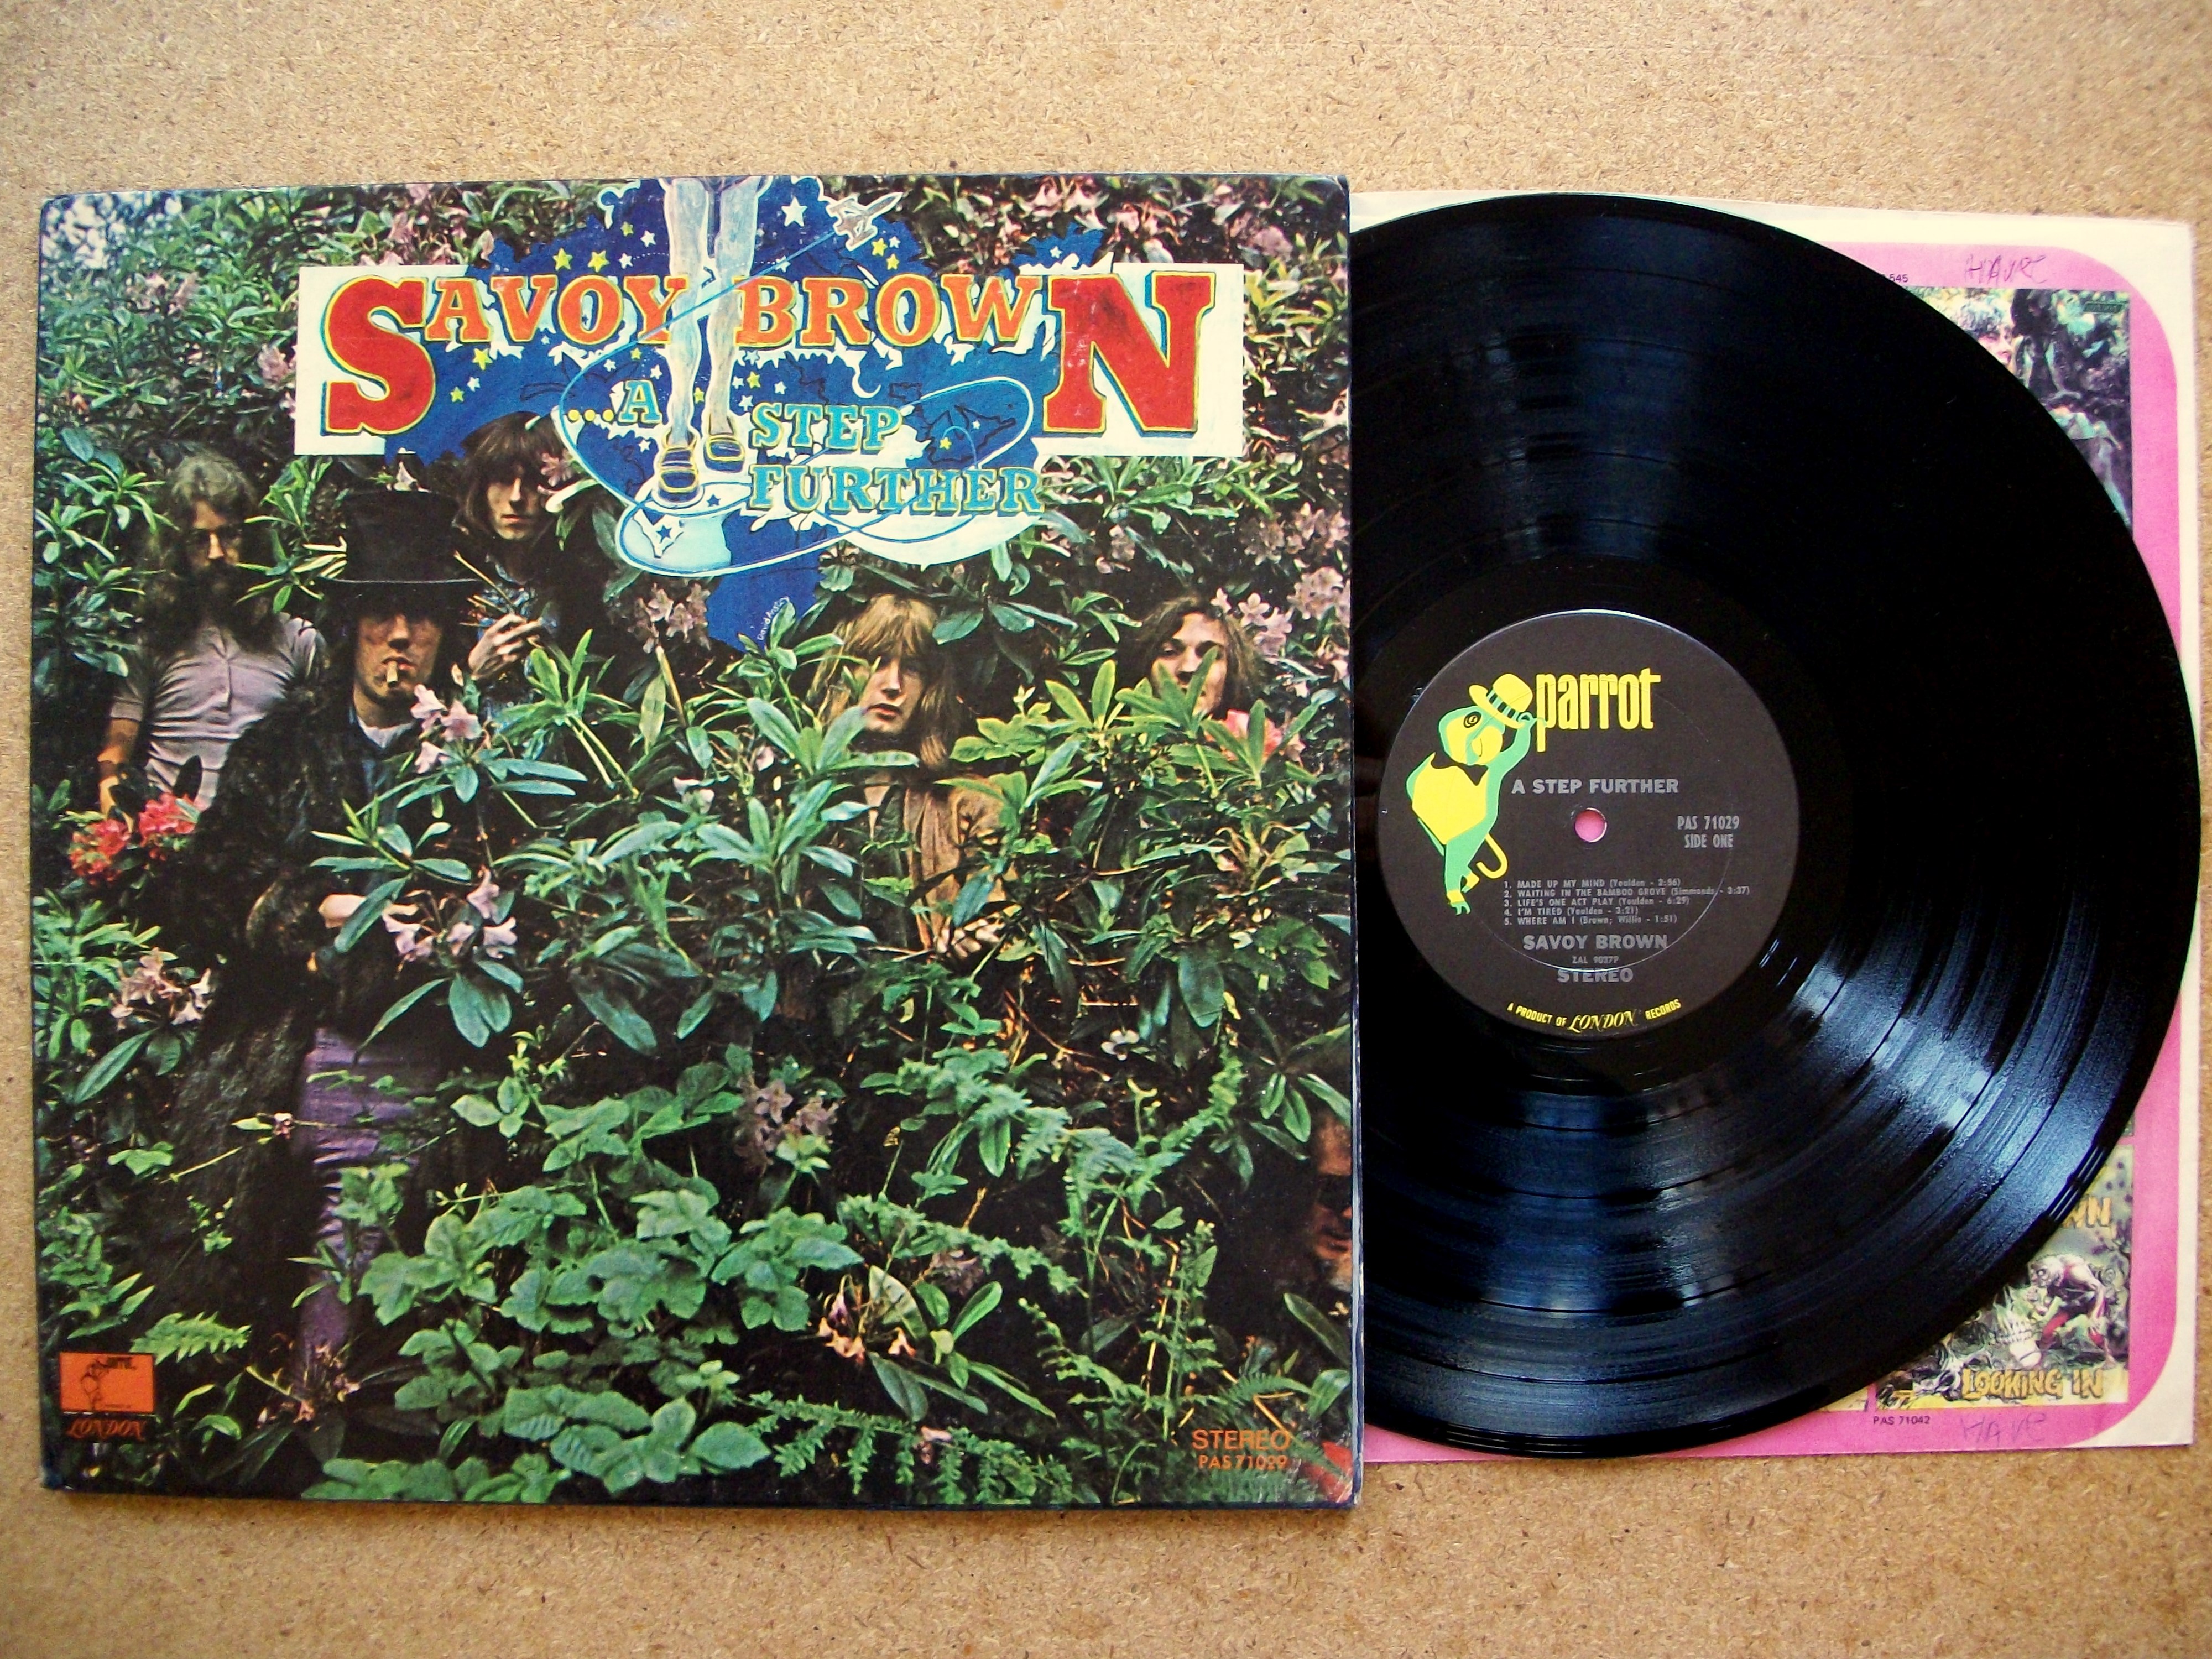 Step farther. Savoy Brown 1969. Savoy Brown "a Step further". Savoy Brown - 1969 - a Step further фото. Savoy Brown 2020.